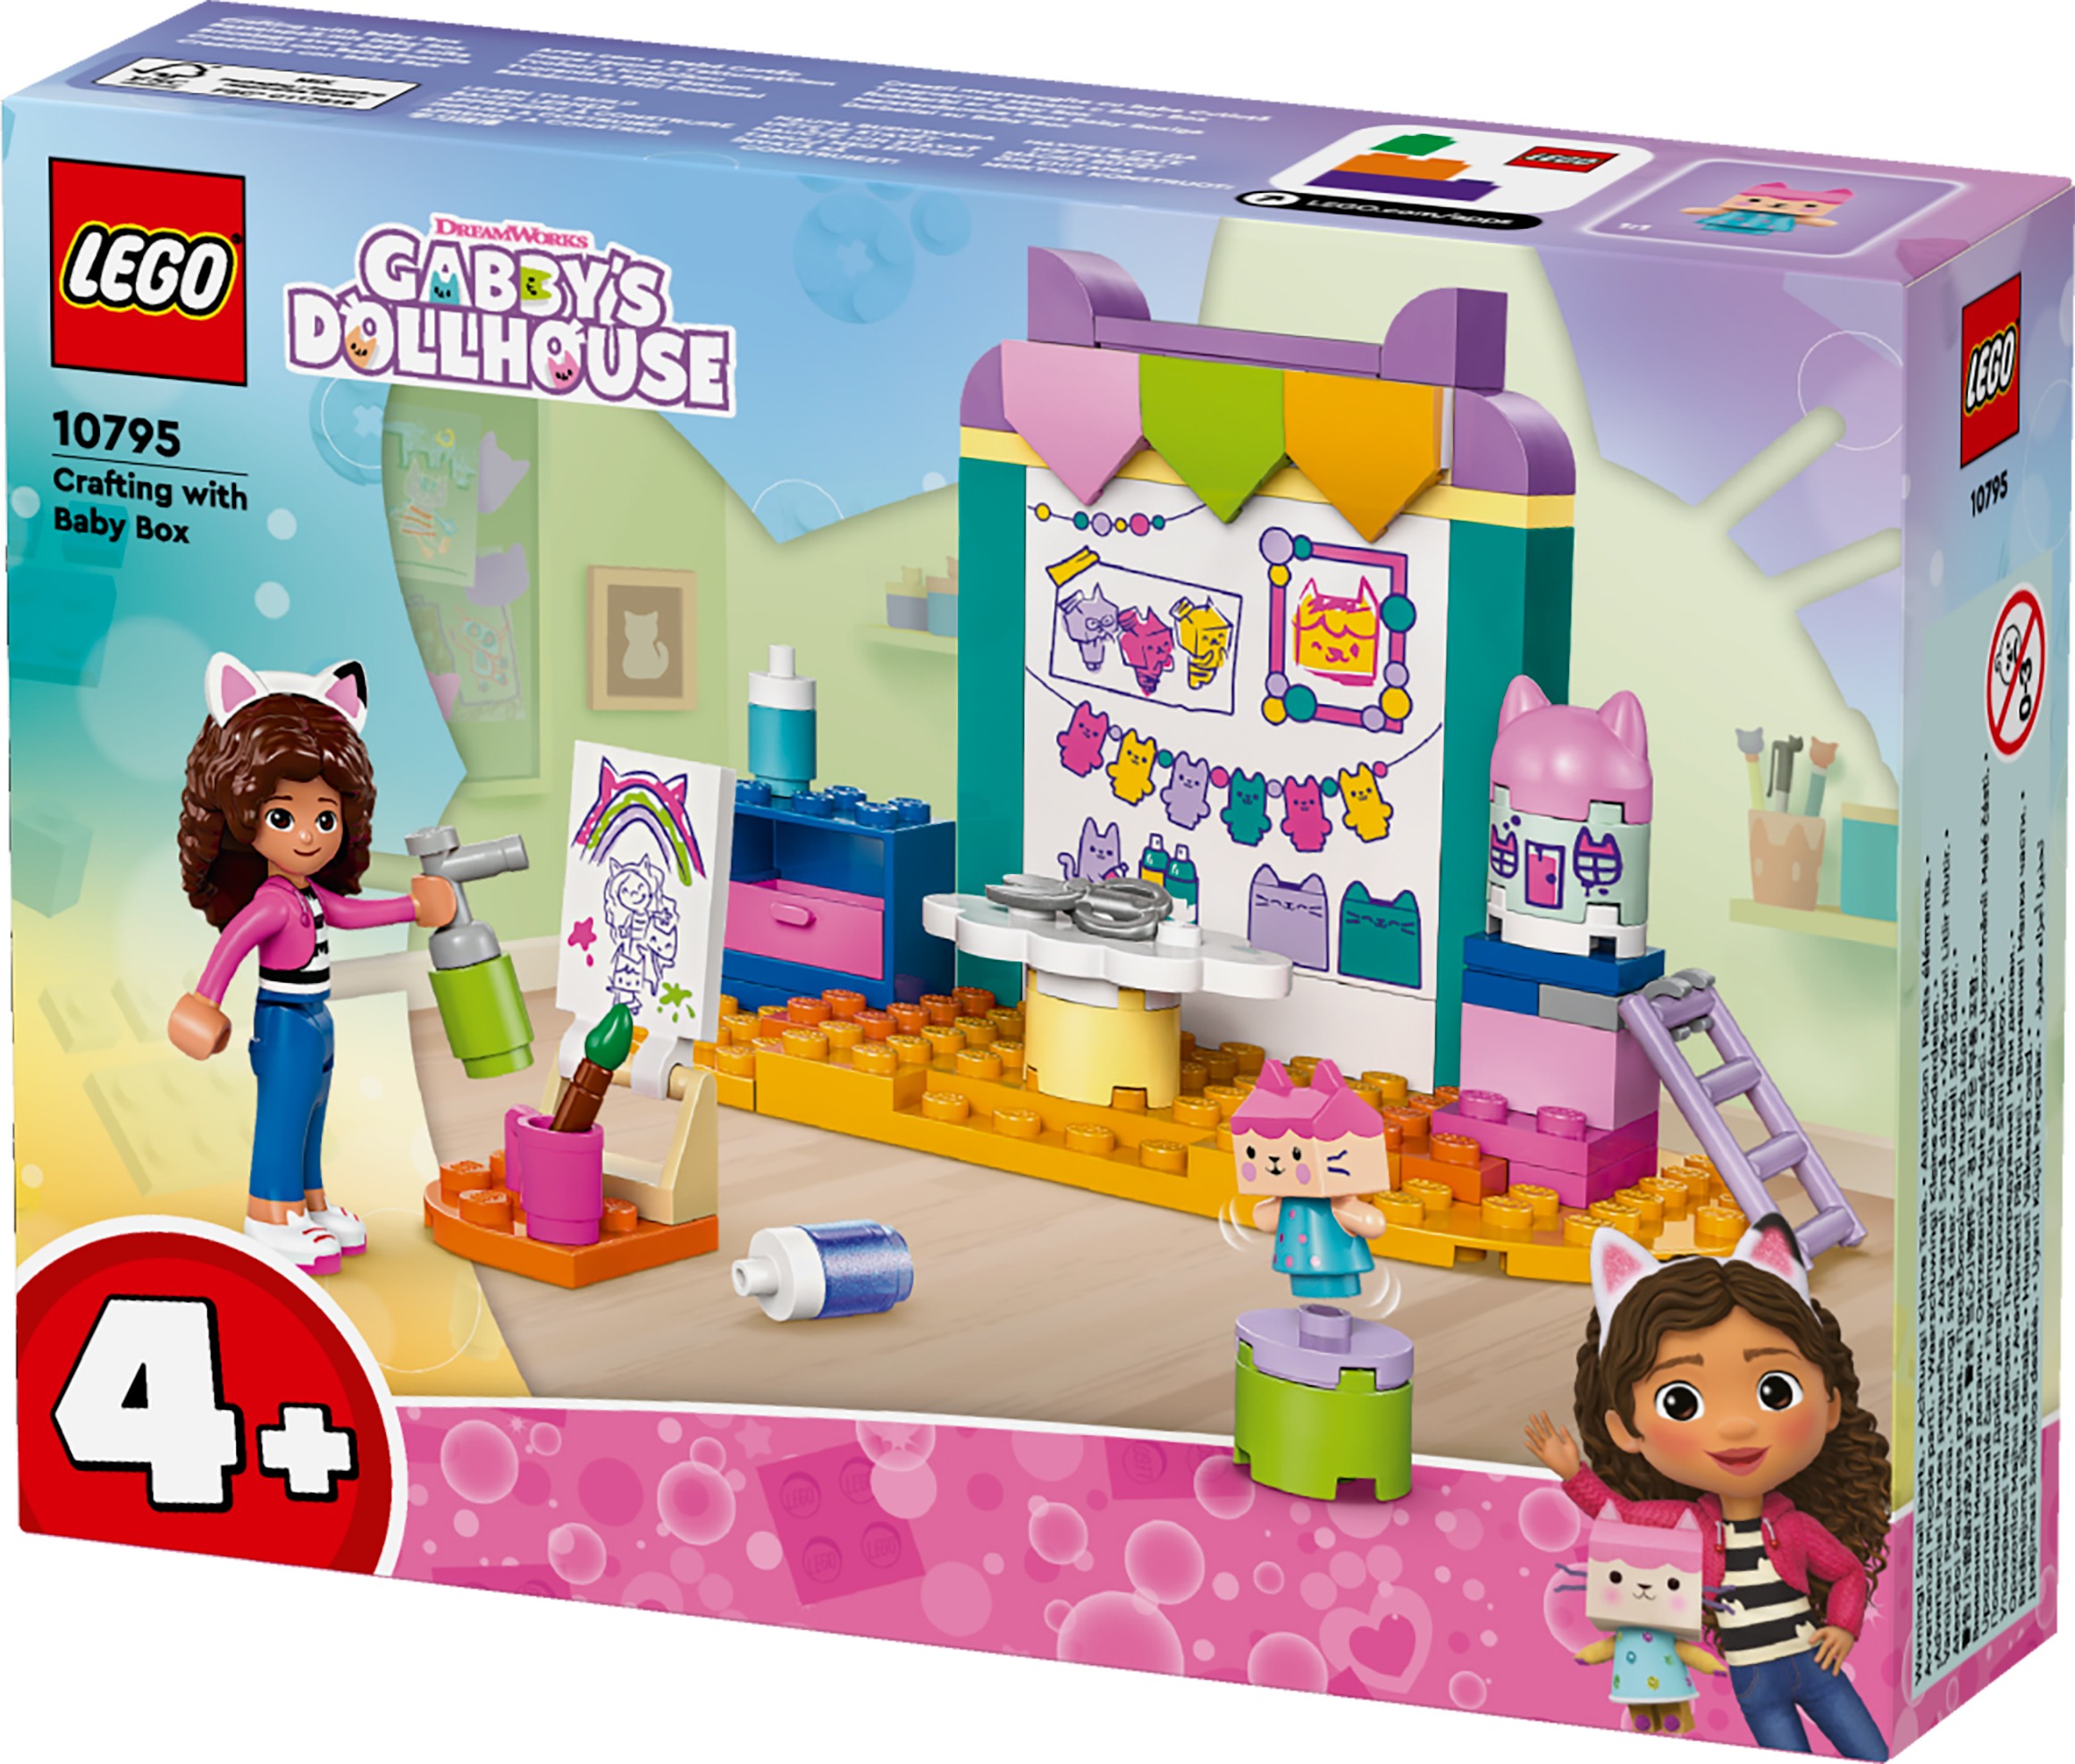 Констуктор LEGO Gabby's Dollhouse Делаем вместе з Доцей-Бокс 10795 фото 2